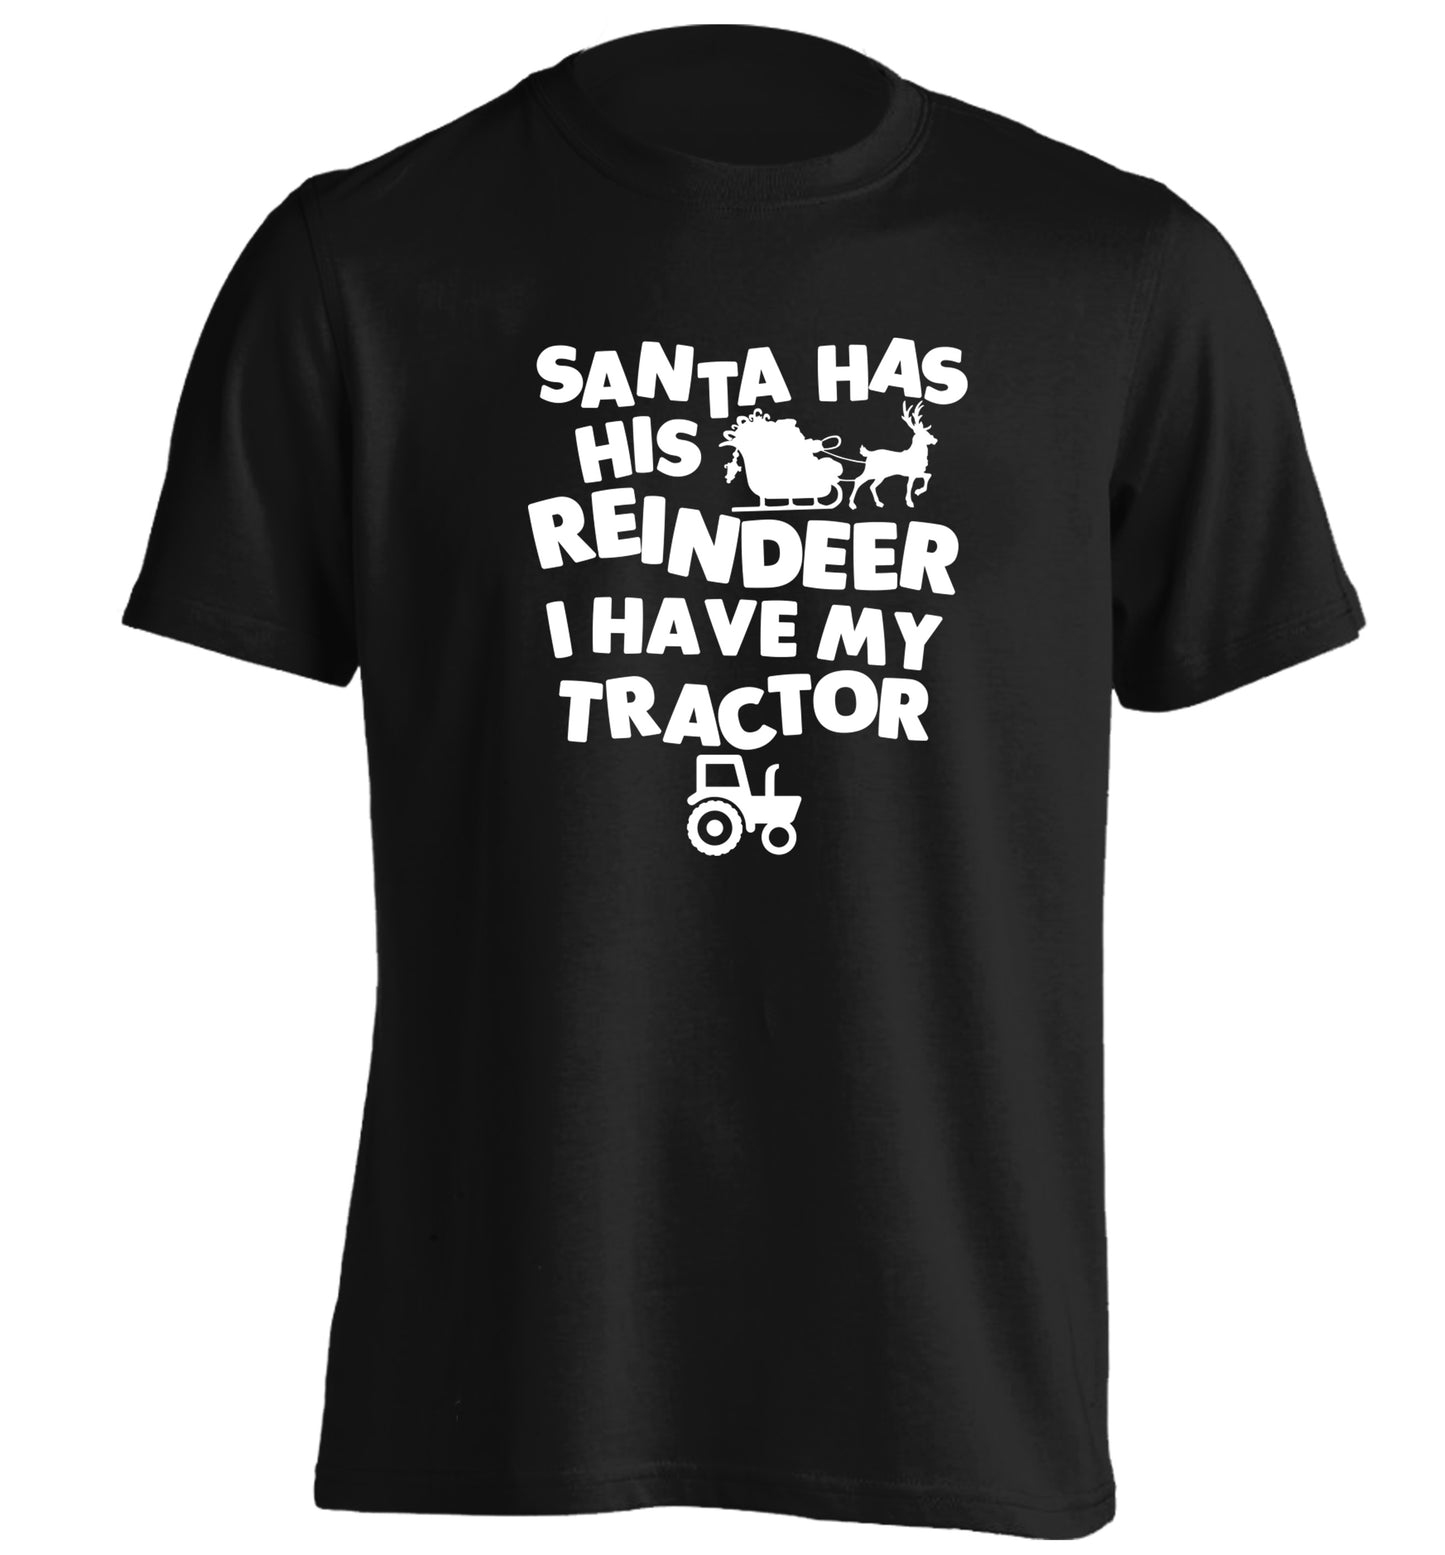 Santa has his reindeer I have my tractor adults unisex black Tshirt 2XL